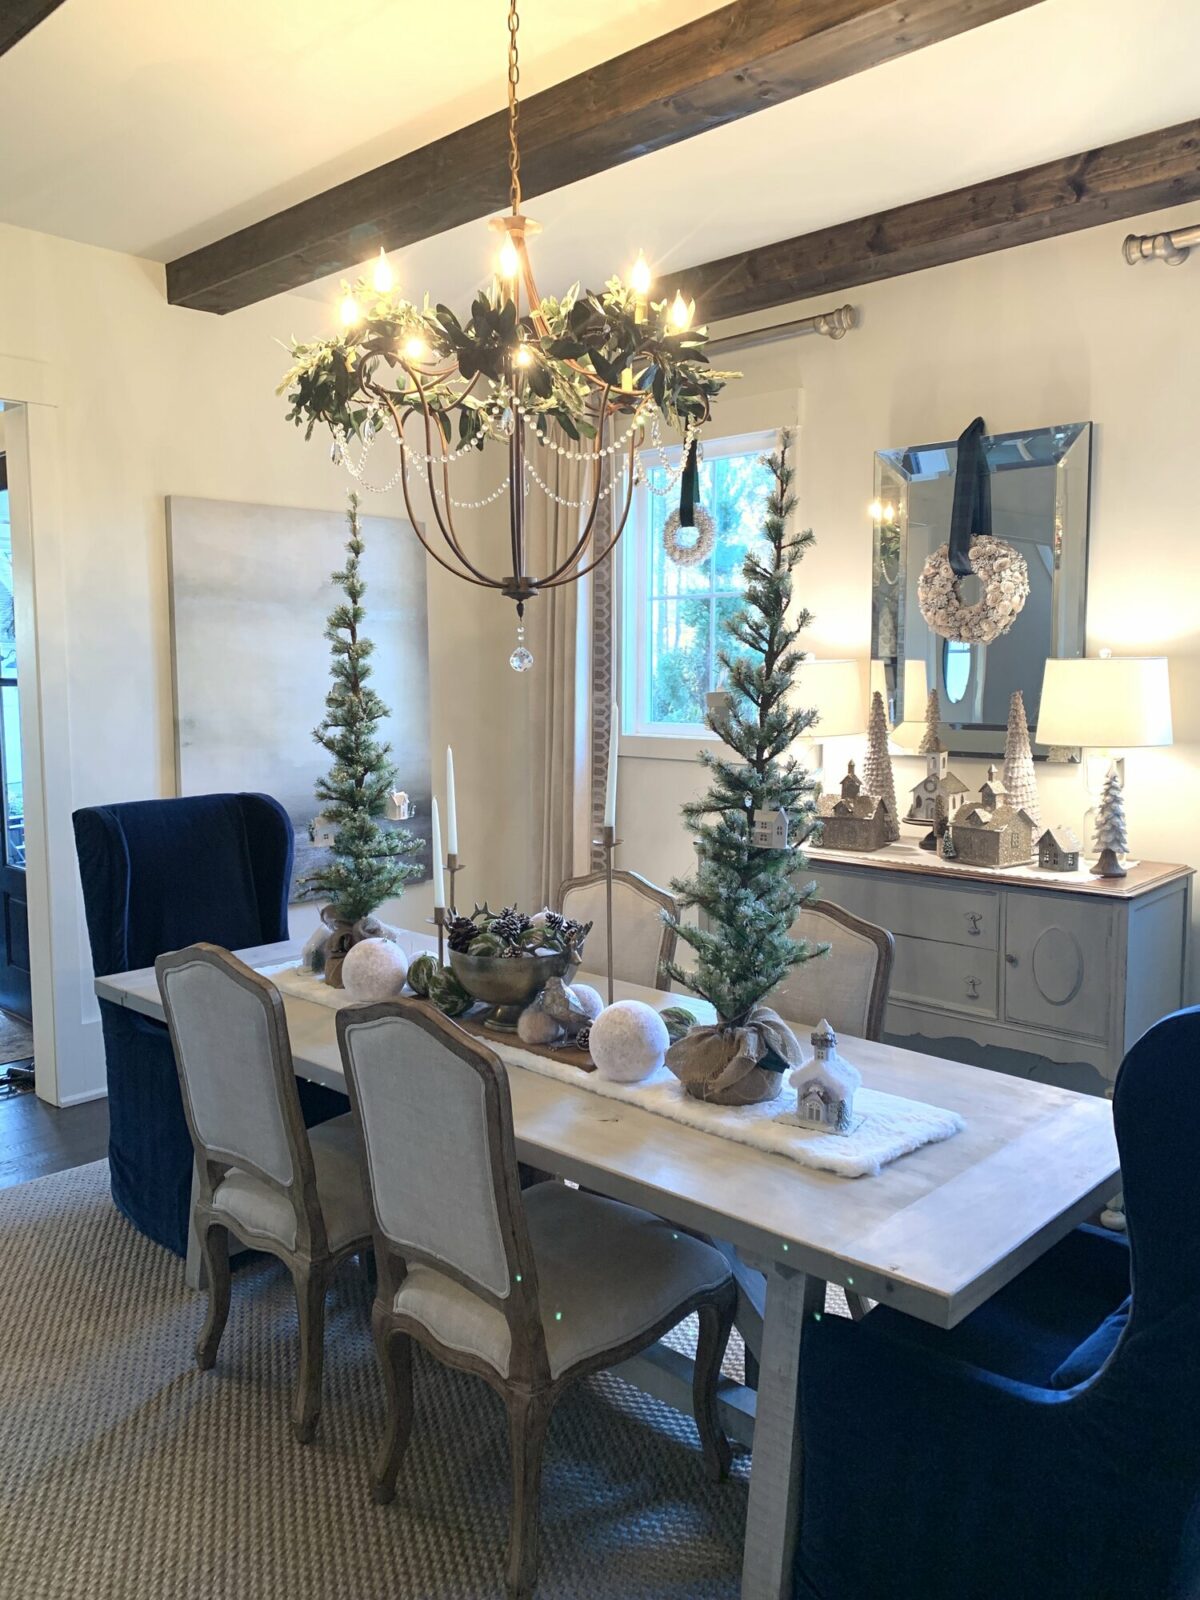 Beautiful Holiday Tablescape in Custom Dining Room | Hart & Lock Design | Interior Design in Atlanta, GA